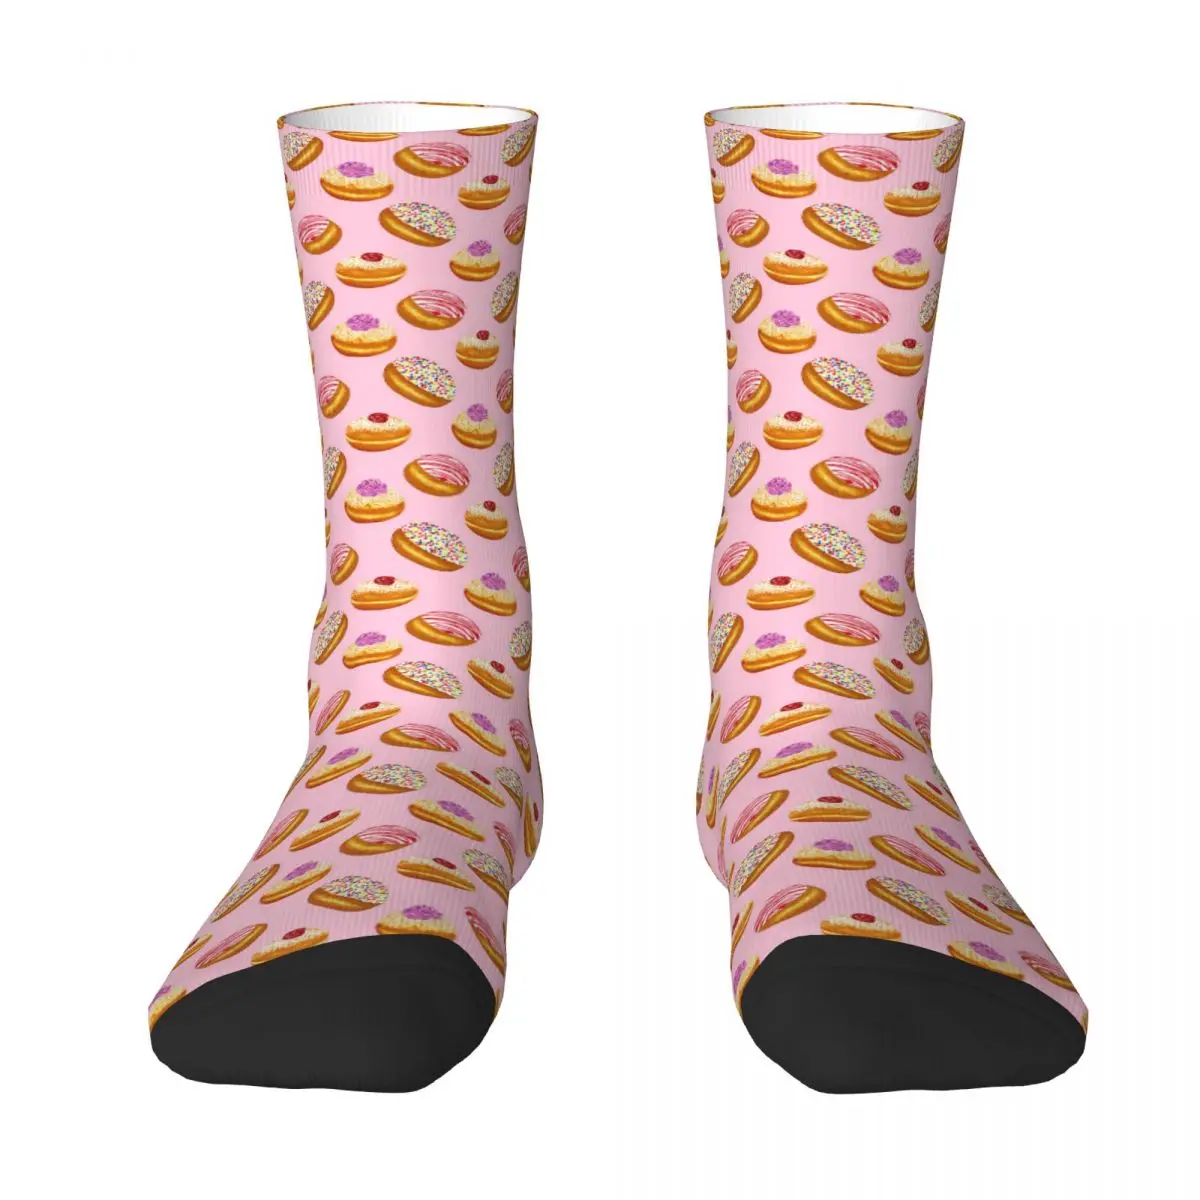 Hand Drawn Watercolor Seamless Pattern Of Colorful Donuts Adult Socks,Unisex socks,men Socks women Socks